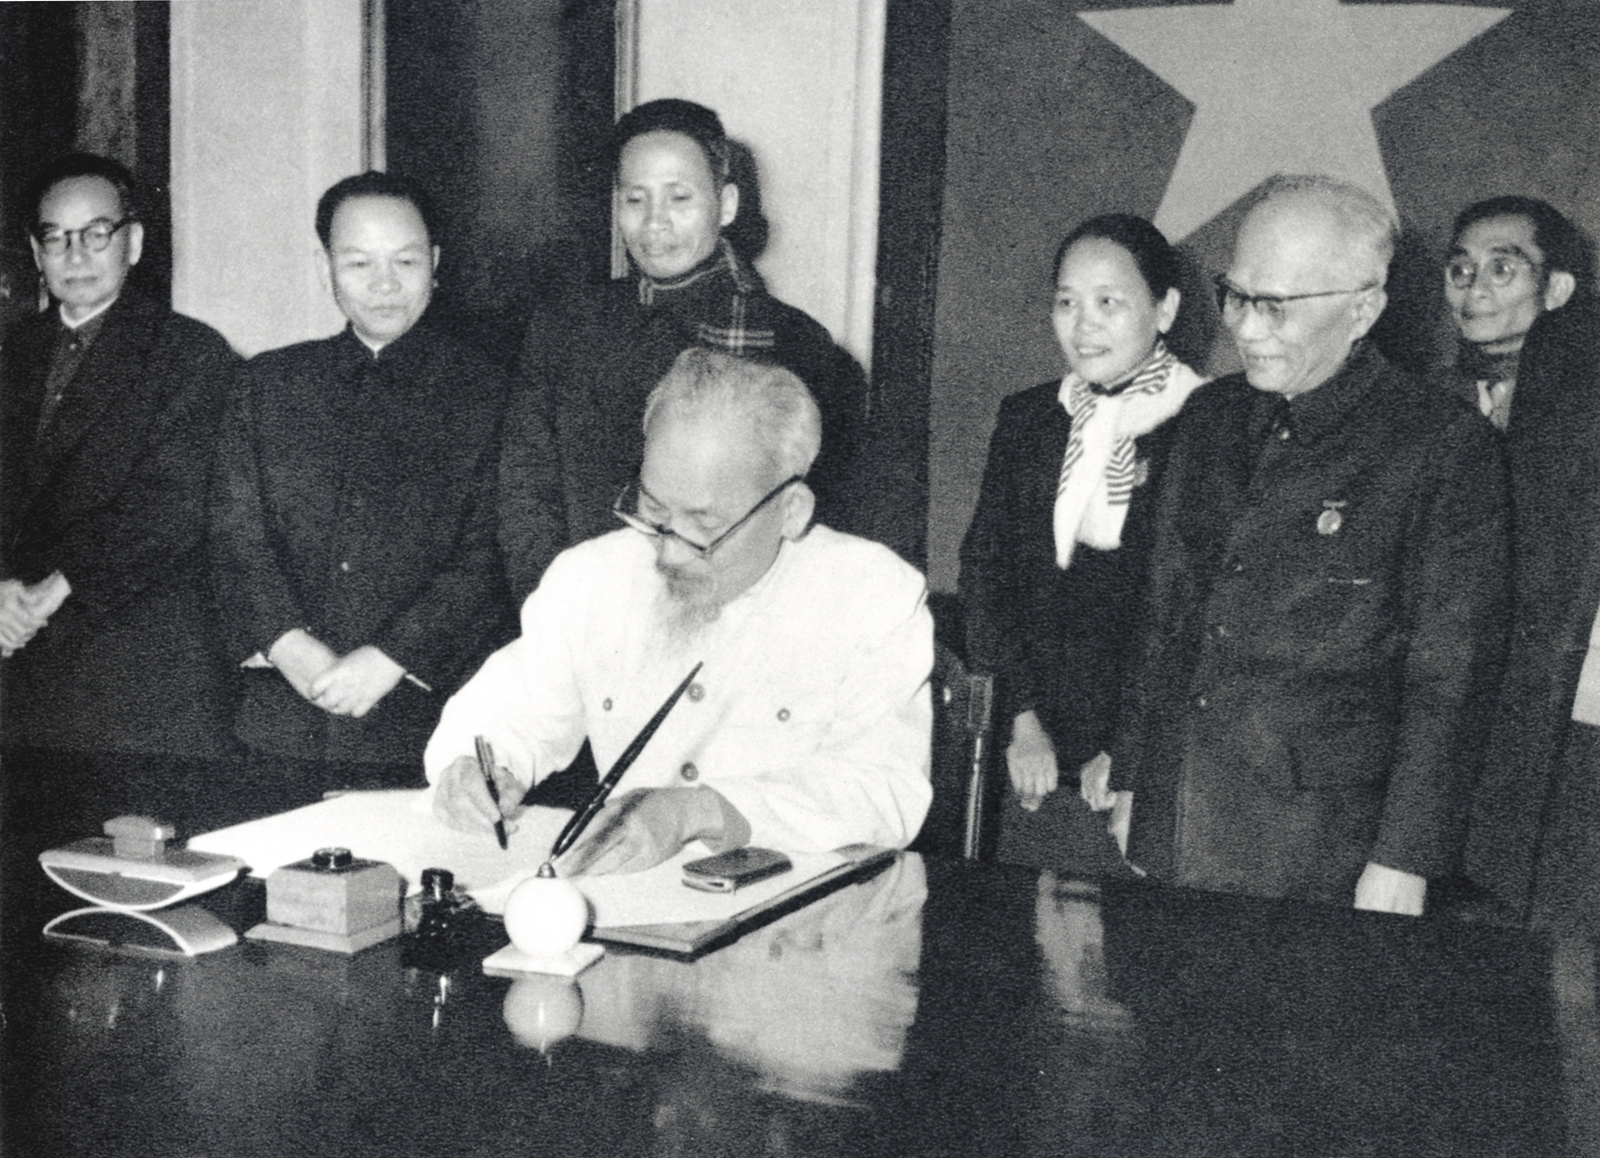 Ho Chi Minh: Disciplined Communist